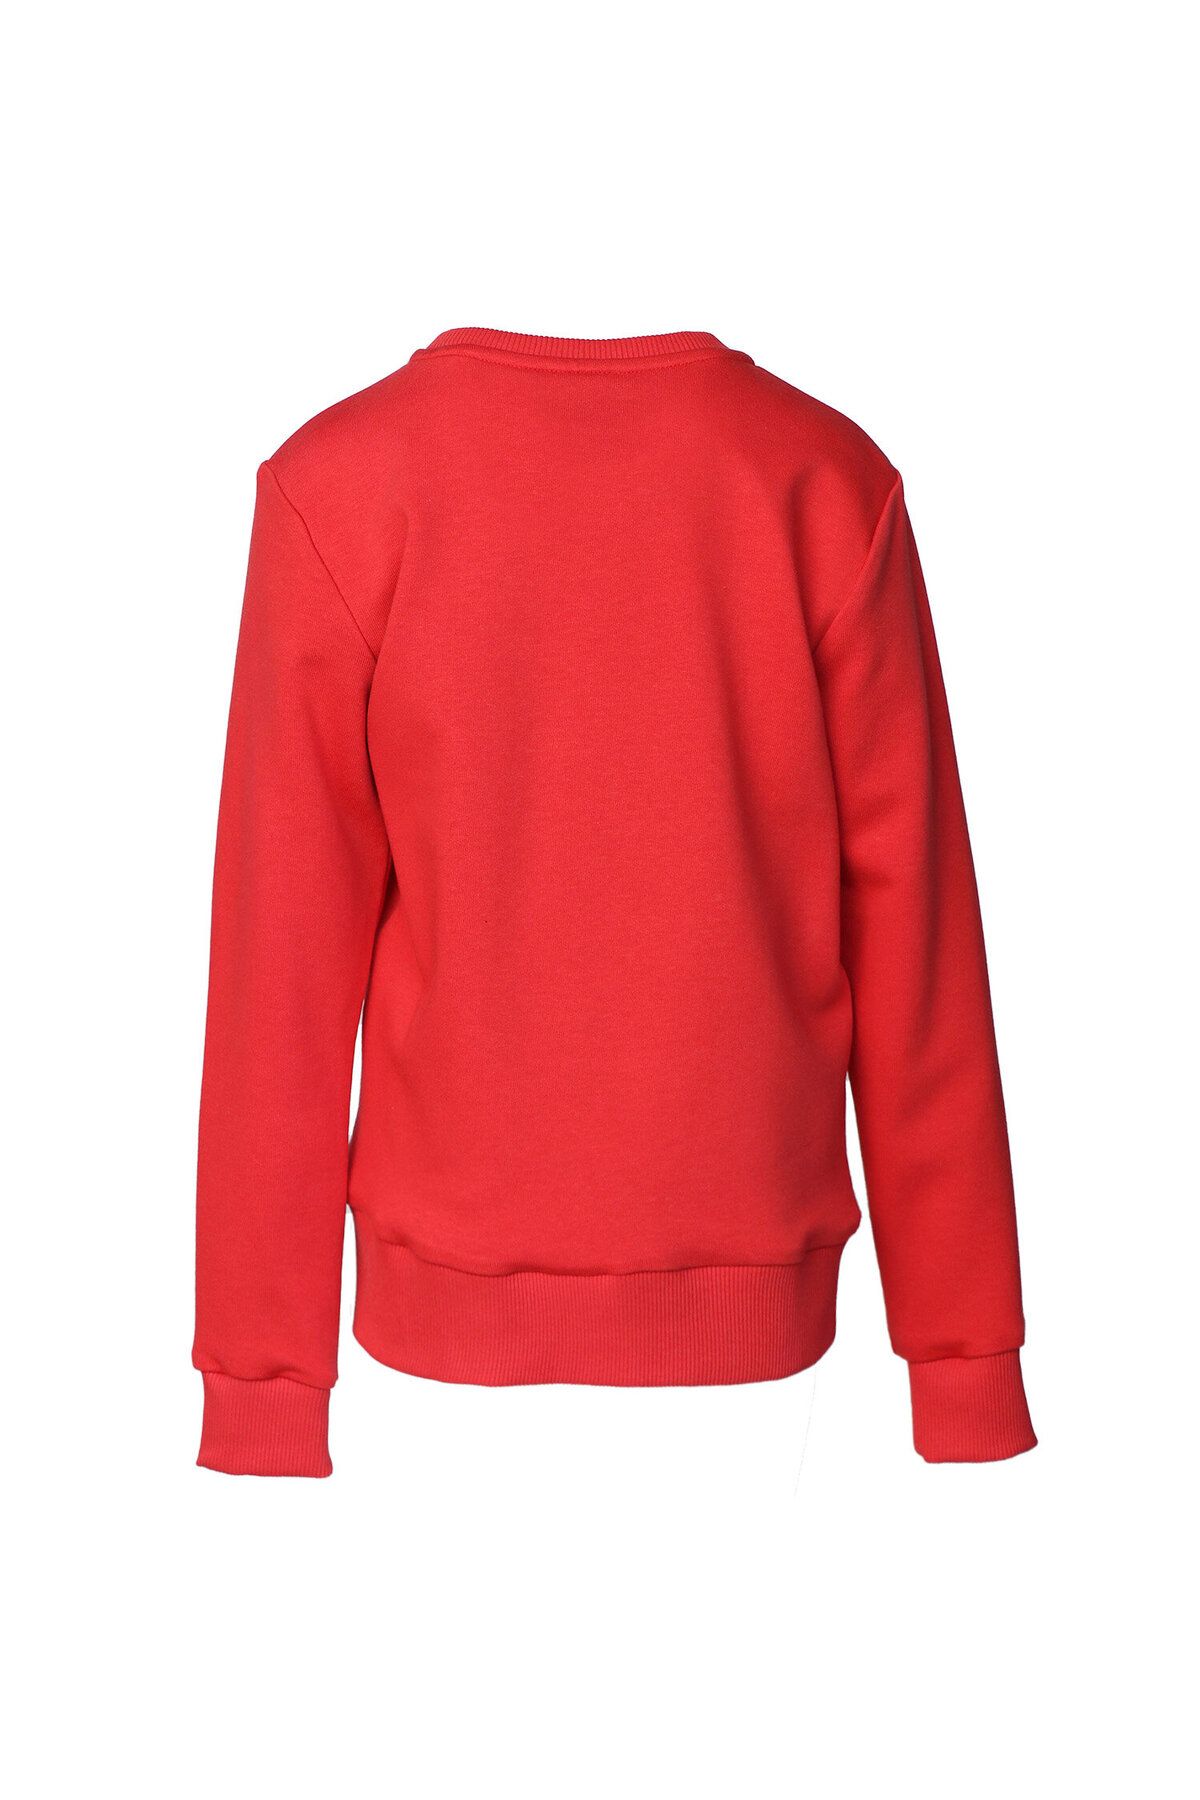 hummel Girls Artemis Red Sweatshirt 921585-2220